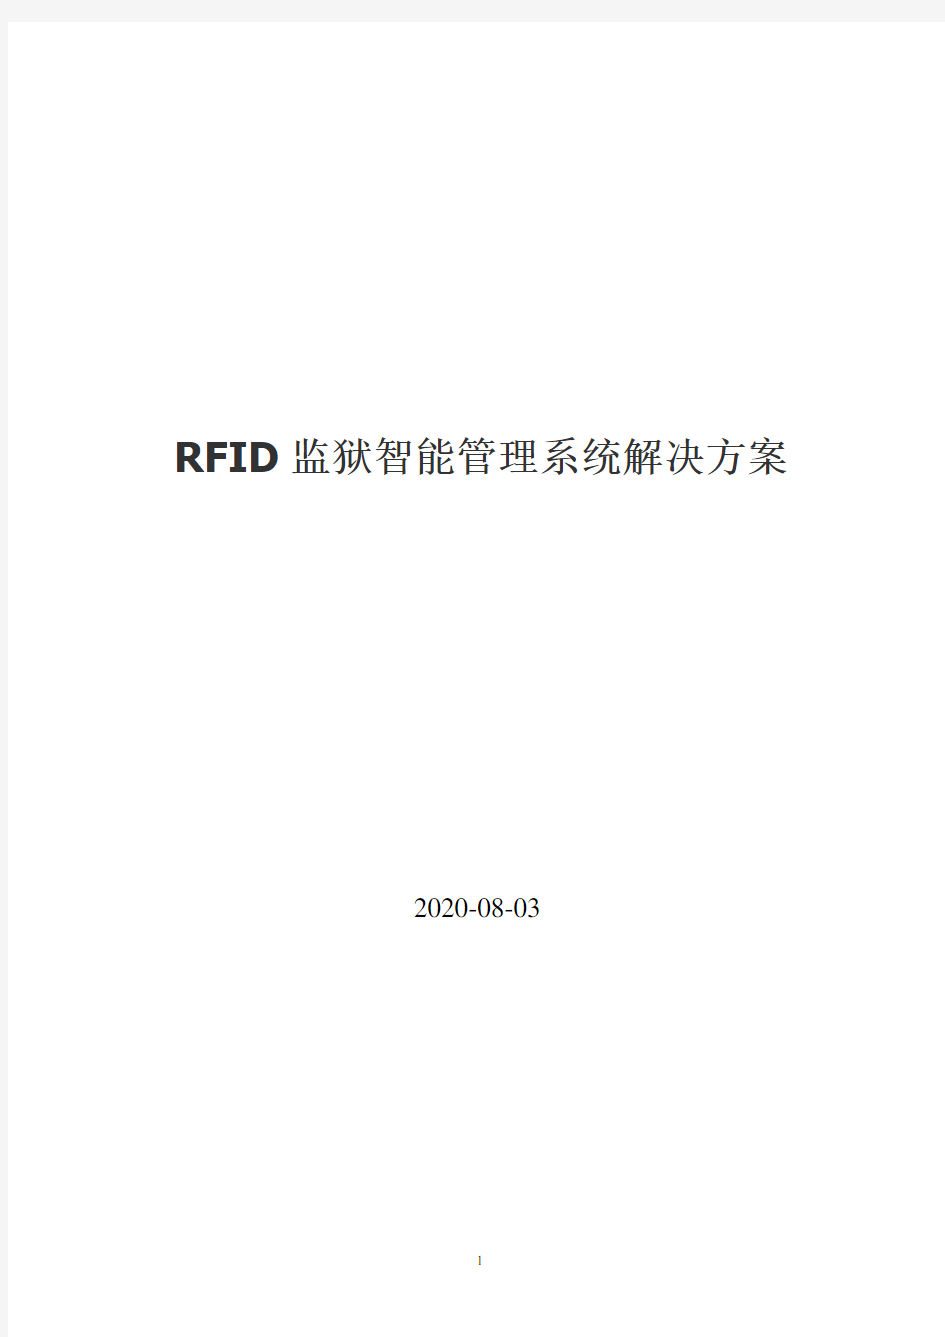 RFID监狱智能管理系统解决方案